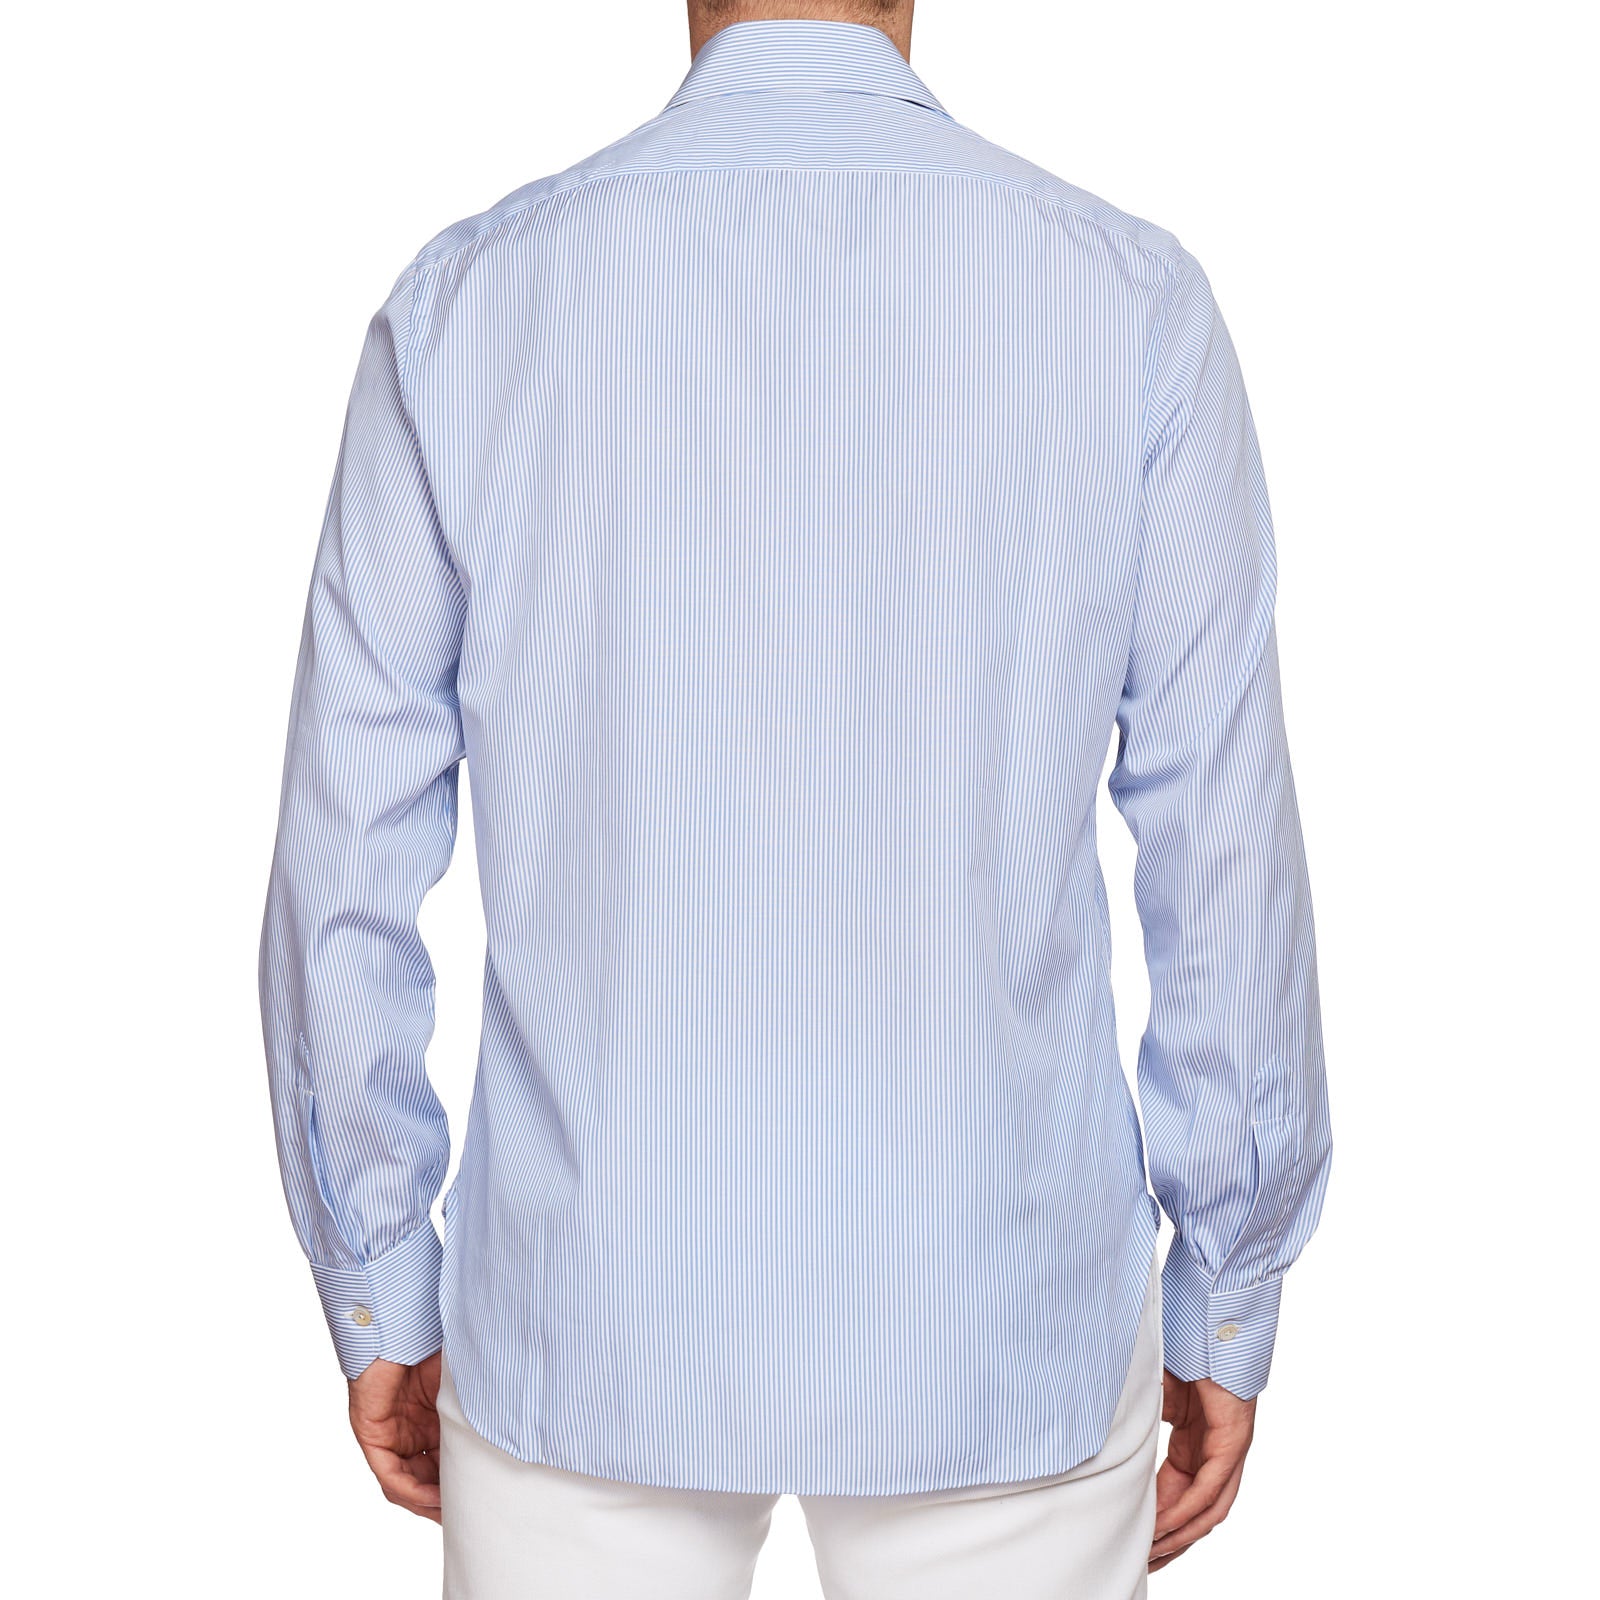 KITON Napoli Handmade Blue Striped Poplin Cotton Dress Shirt EU 40 US 15.75 NEW KITON